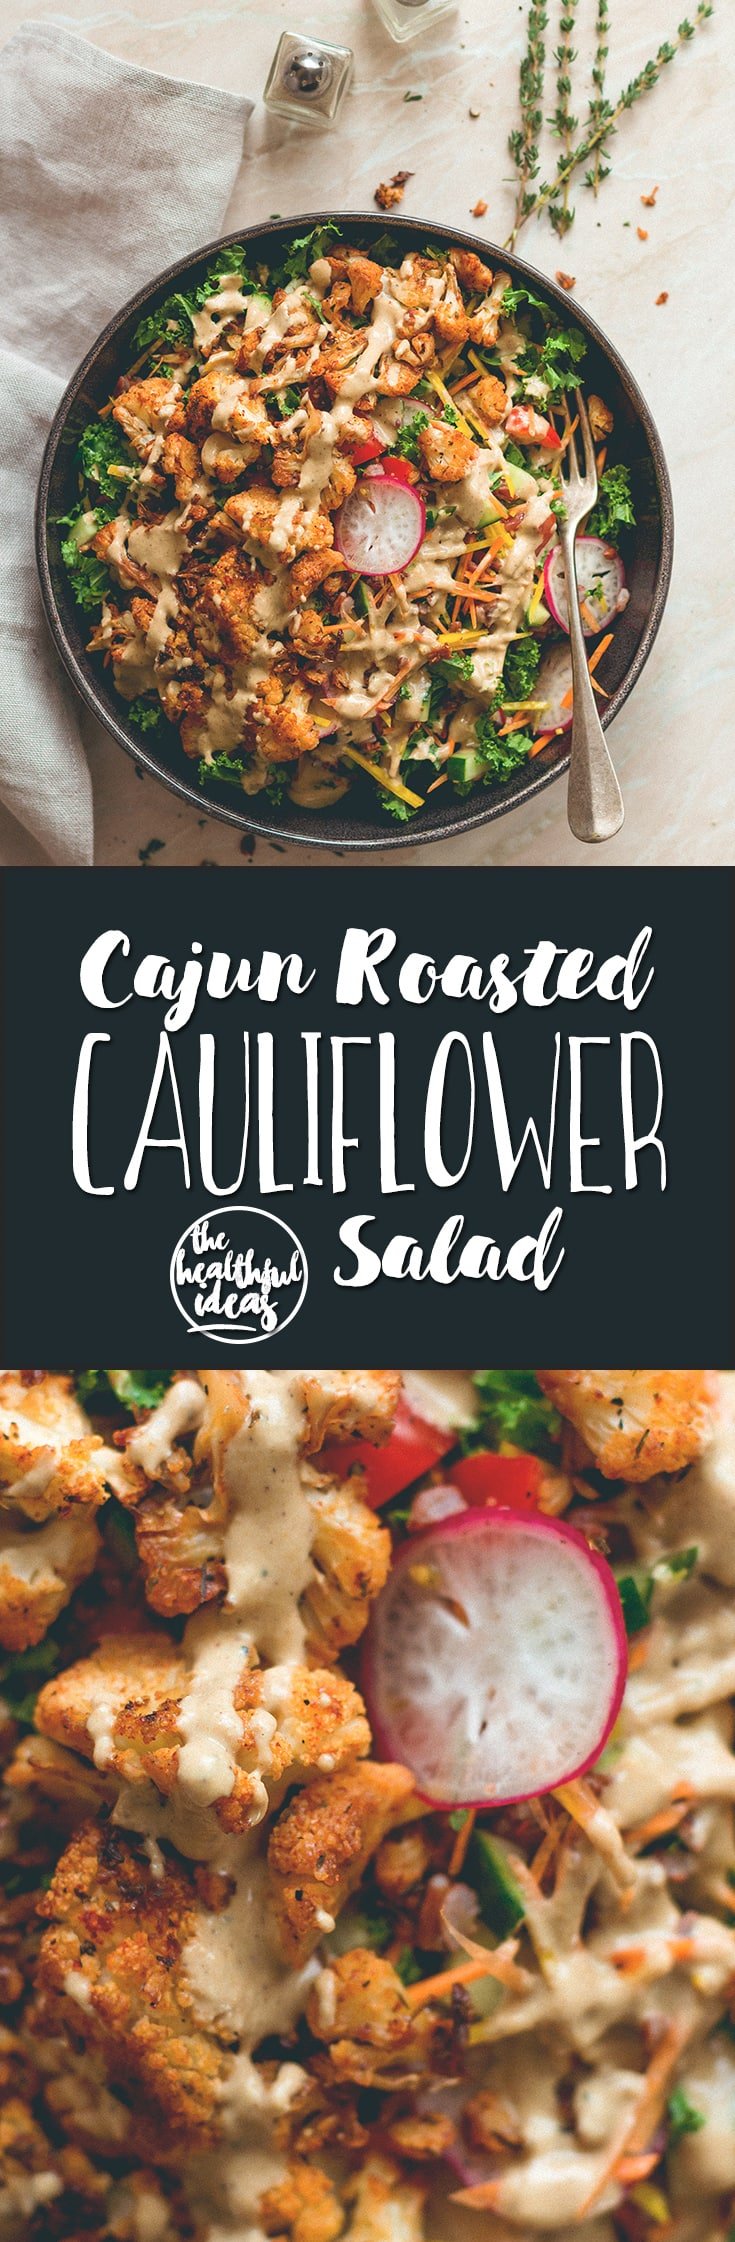 Cajun Roasted Cauliflower Salad - I love cajun seasoning on roasted fall vegetables. This salad is perfect for this time of the year. Cauliflower, mixed salad, and tahini dressing. (vegan, GF) | thehealthfulideas.com